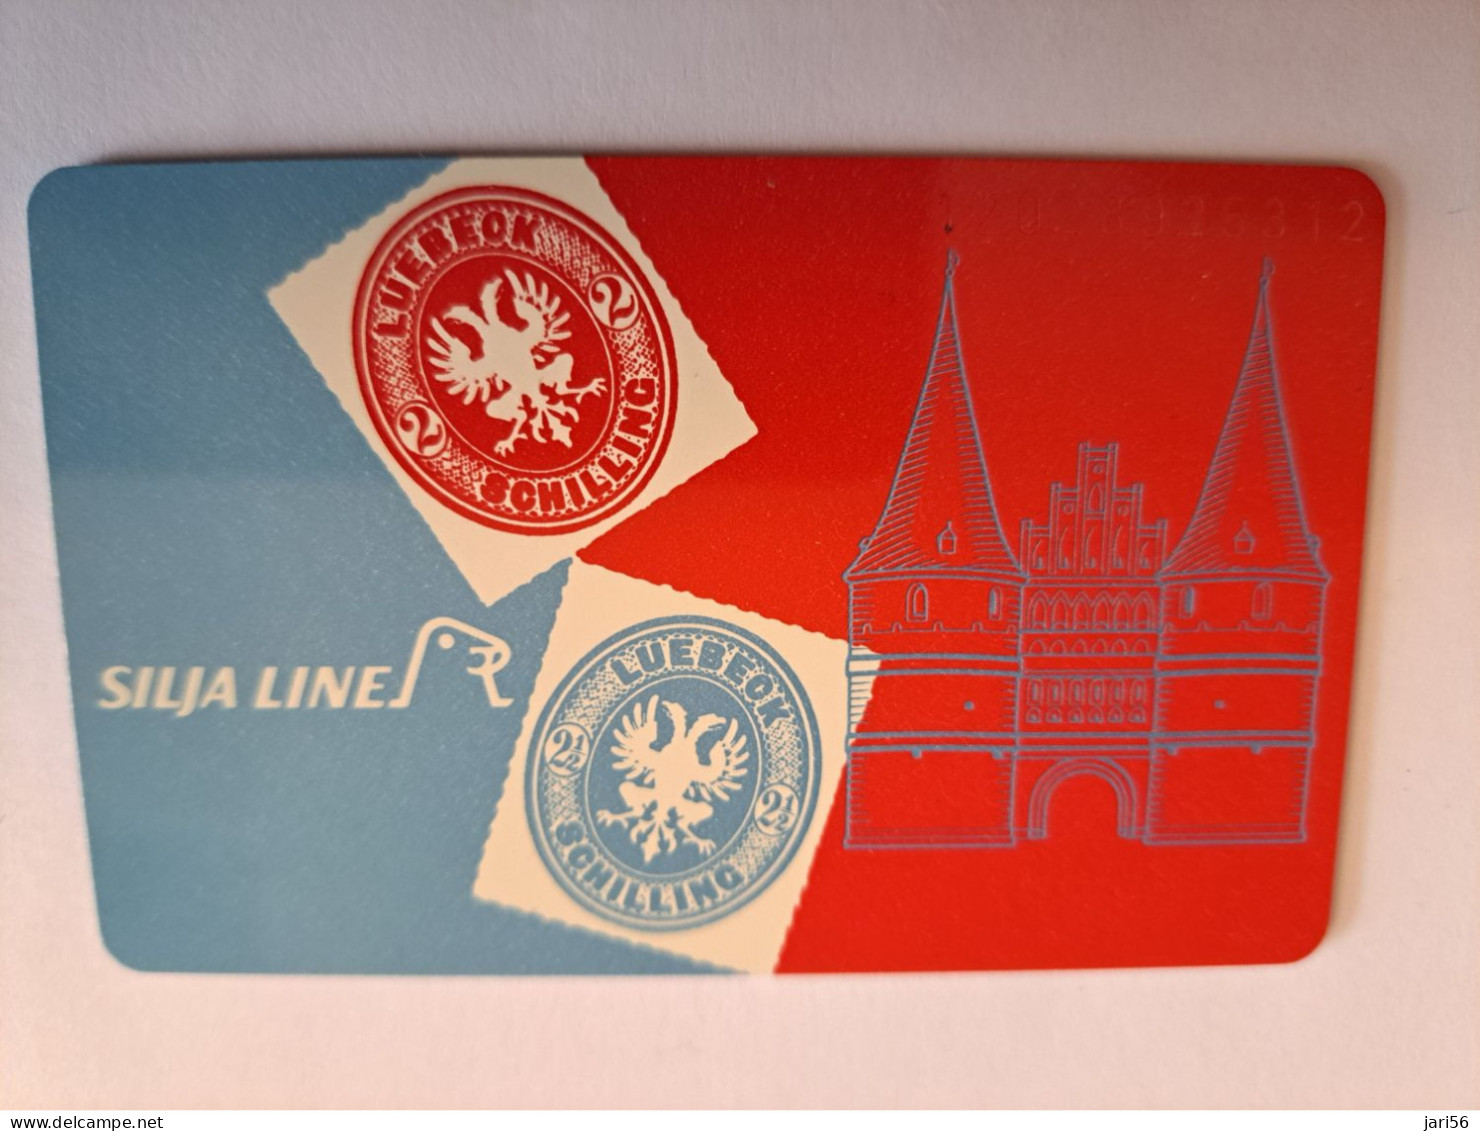 DUITSLAND/ GERMANY  CHIPCARD /SILJA LINE/ LUBECK/ TRAVEMUNDE/HELSINKI/STOCKHOLM    O 020/  5000 EX / MINT CARD **16605** - K-Serie : Serie Clienti